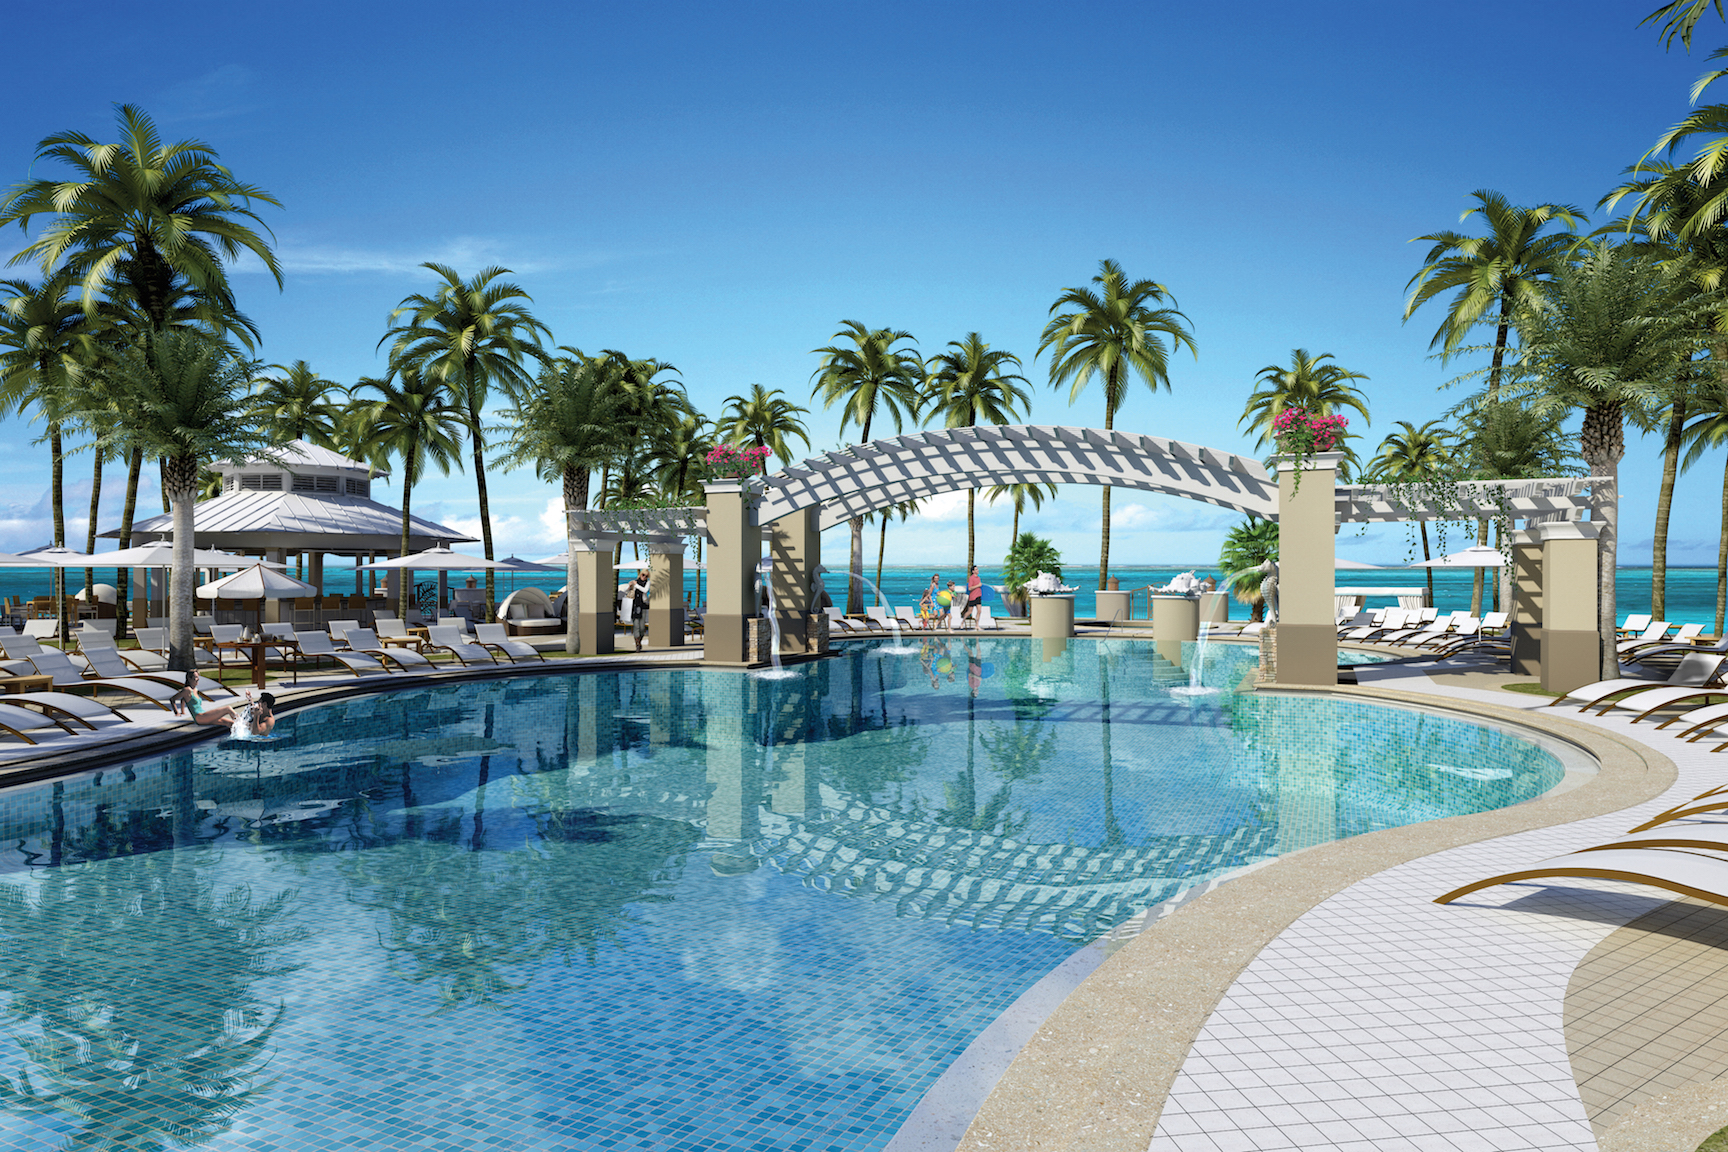 New Florida Keys Spa  Playa Largo Resort  Spa  OceanSpa